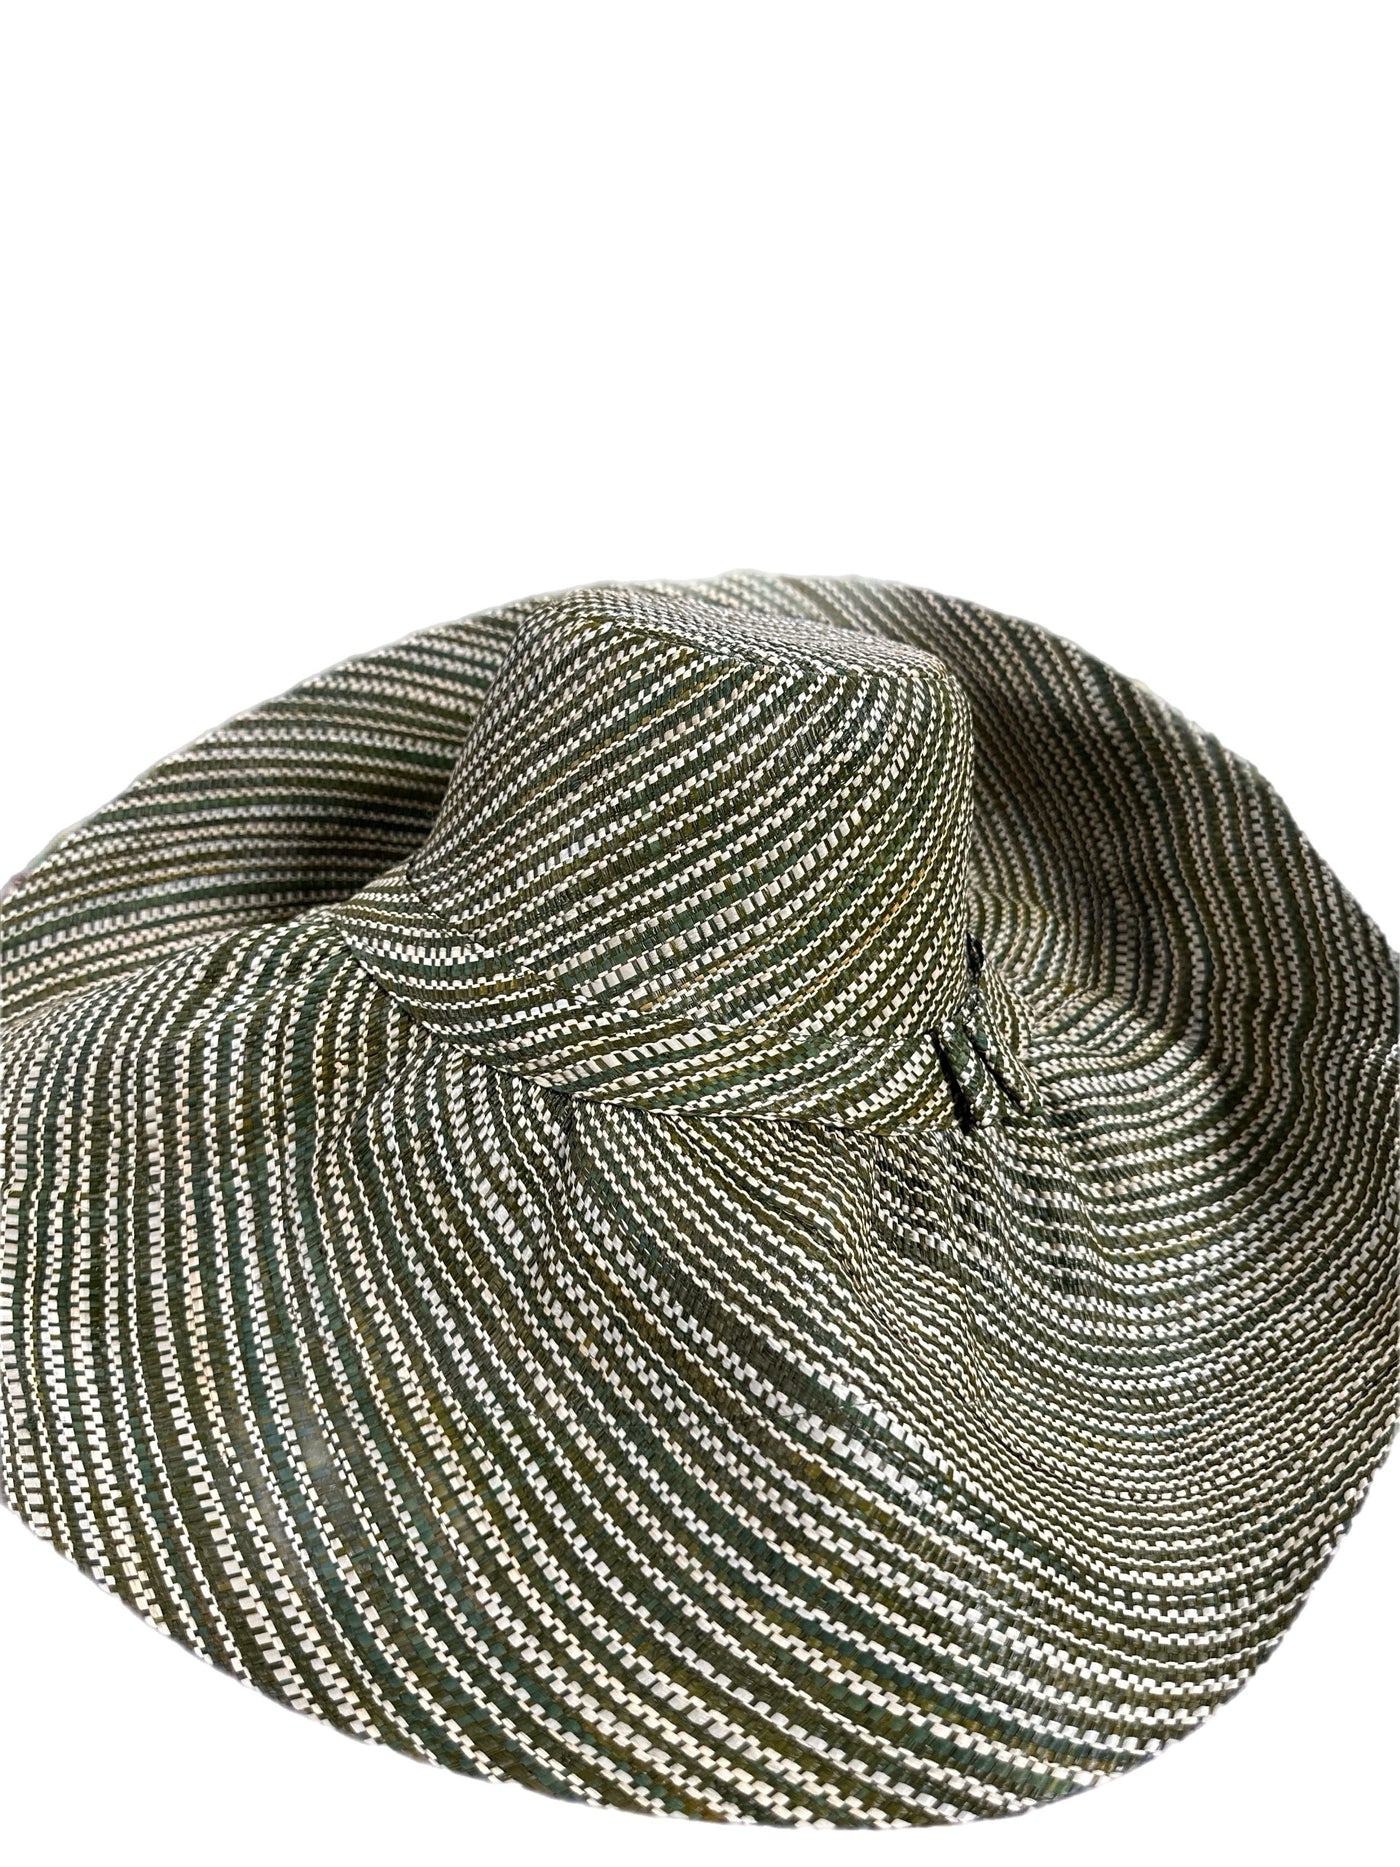 Meena design/Stripes Summer Hat